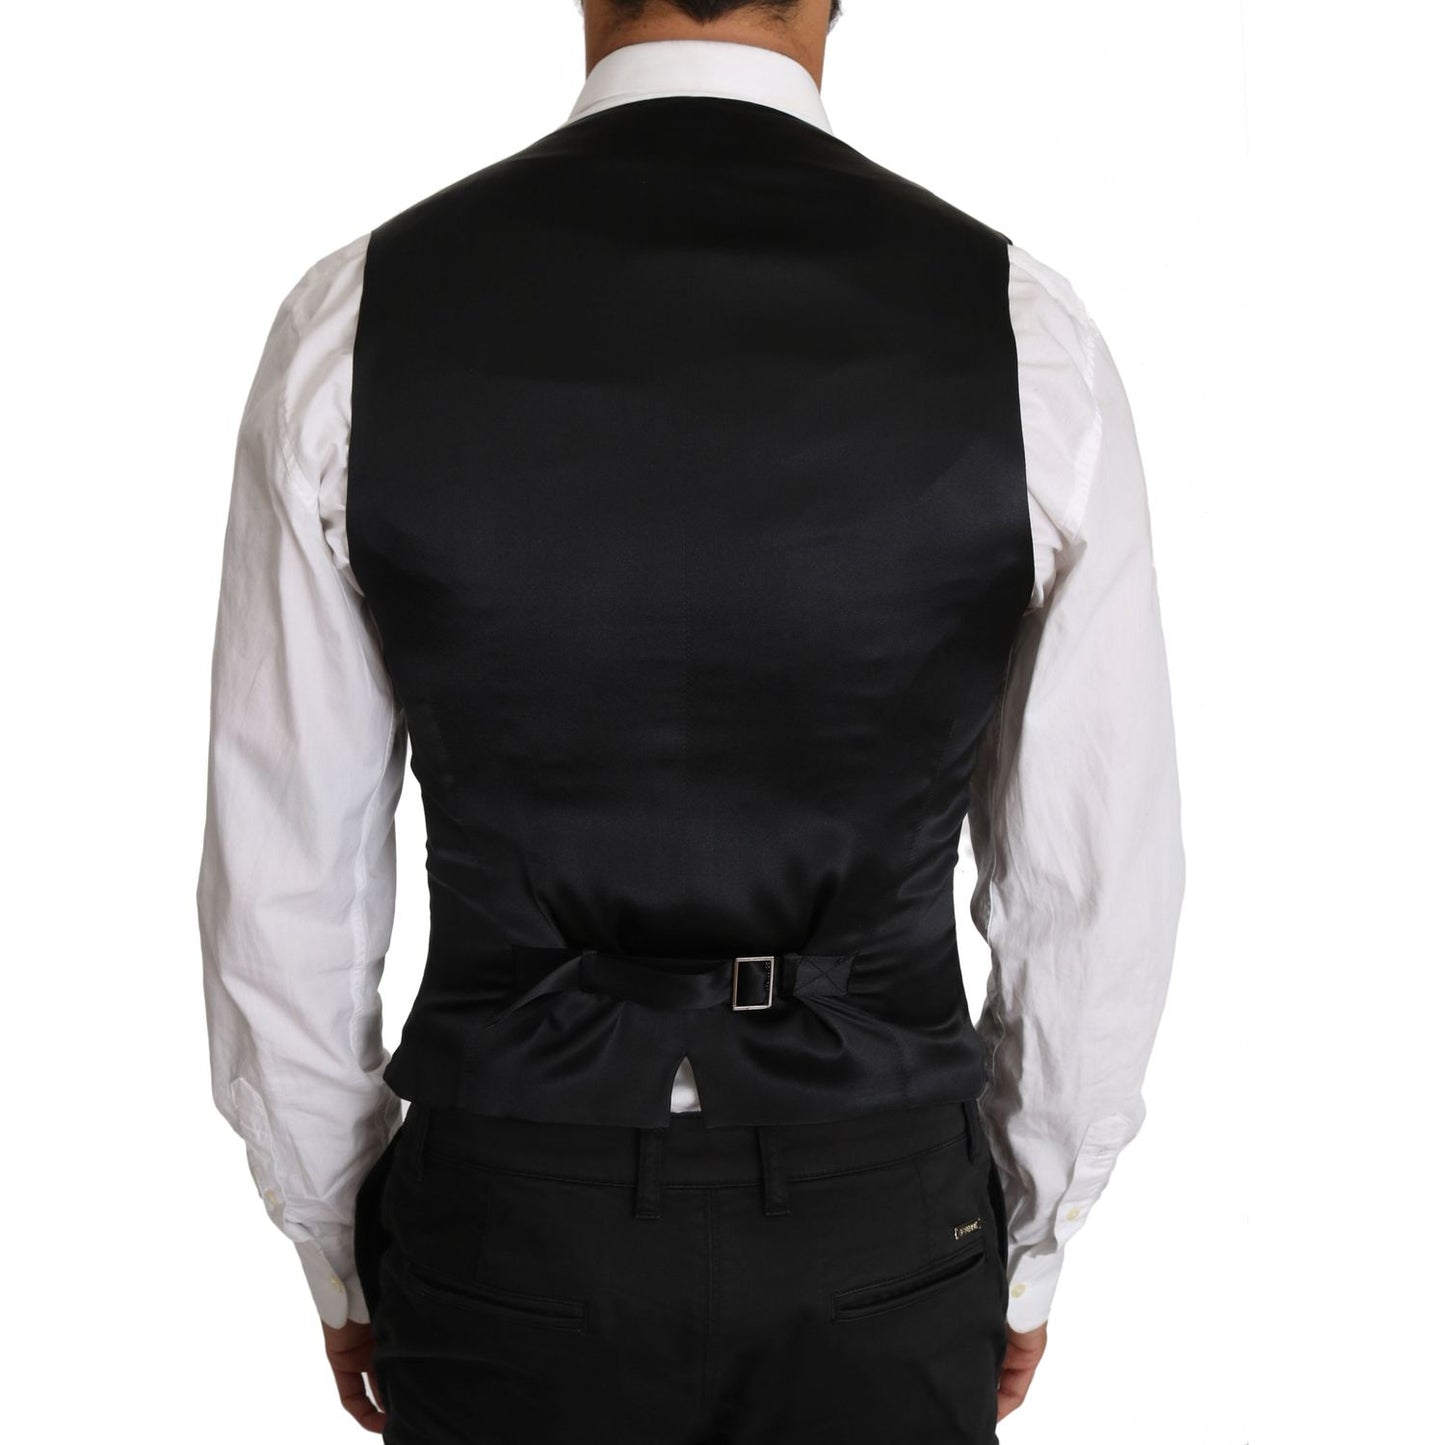 Dolce & Gabbana Sleek Double Breasted Slim Fit Wool Vest gray-wool-double-breasted-waistcoat-vest